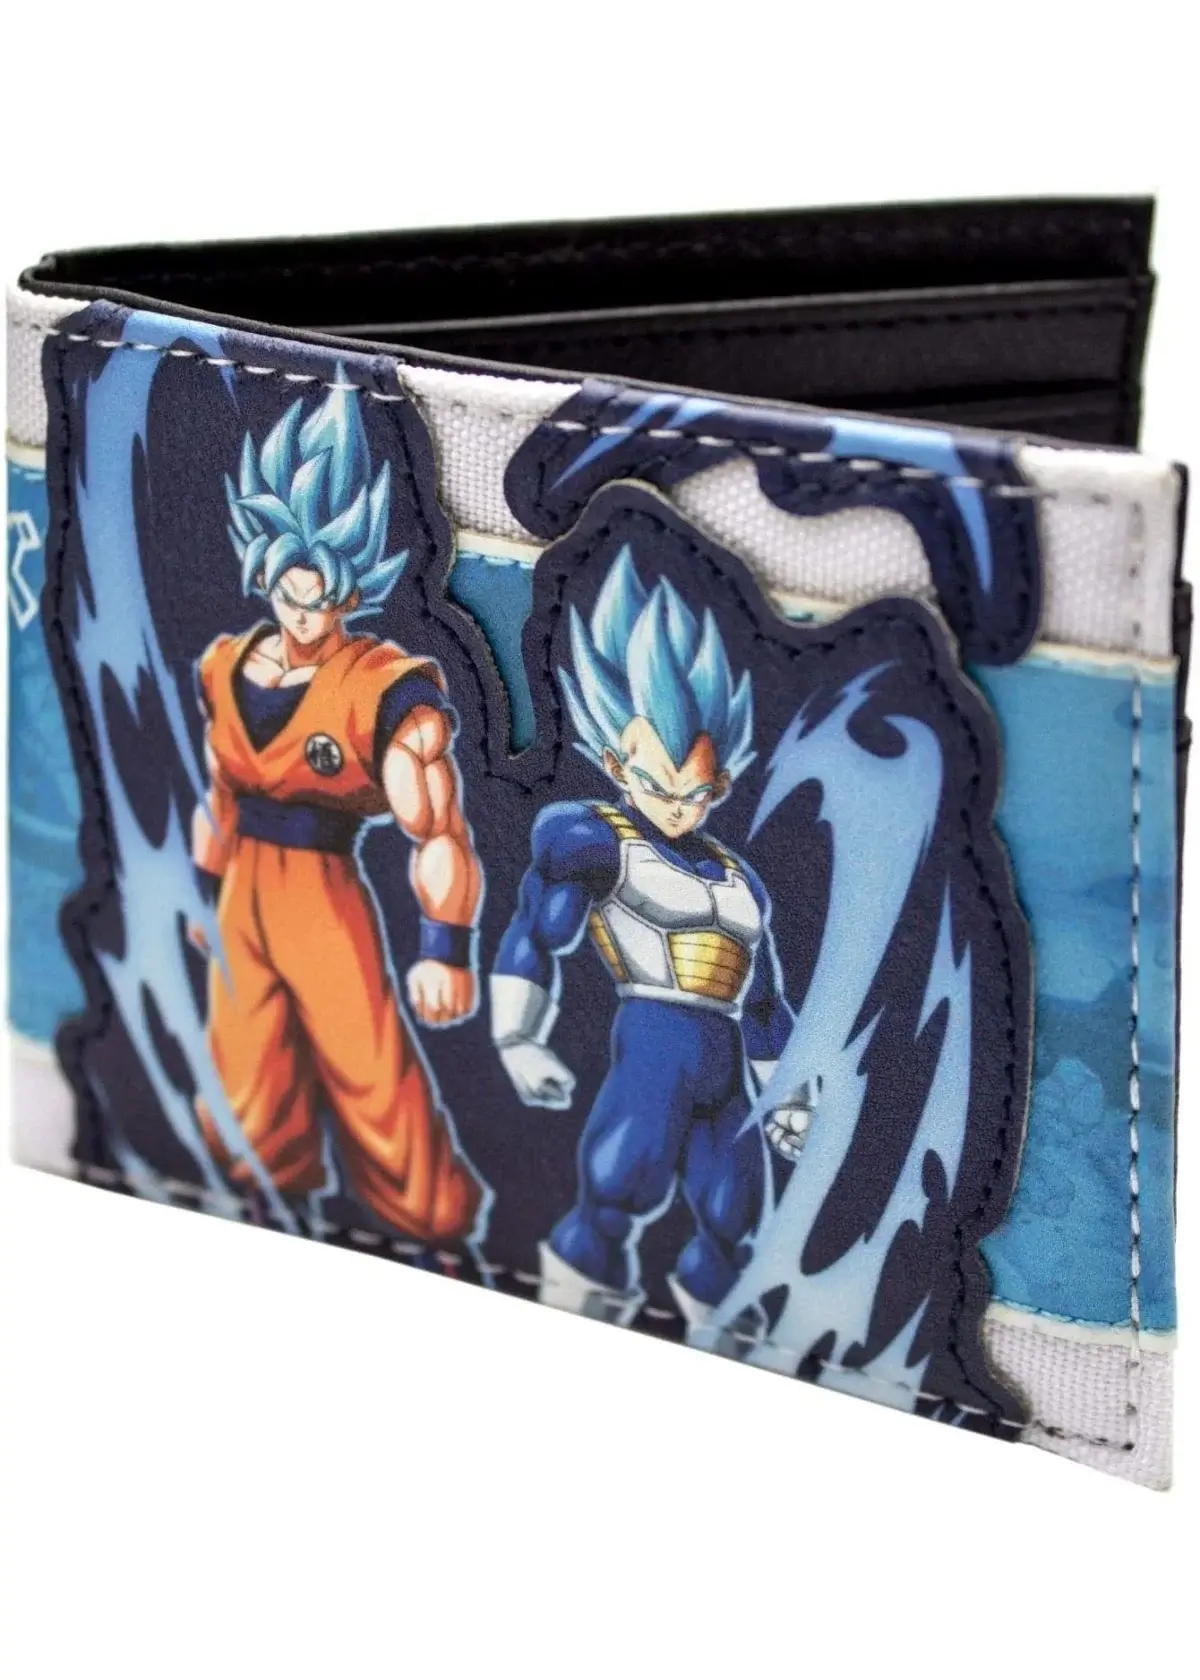 How do I make a custom Dragon Ball Z wallet?